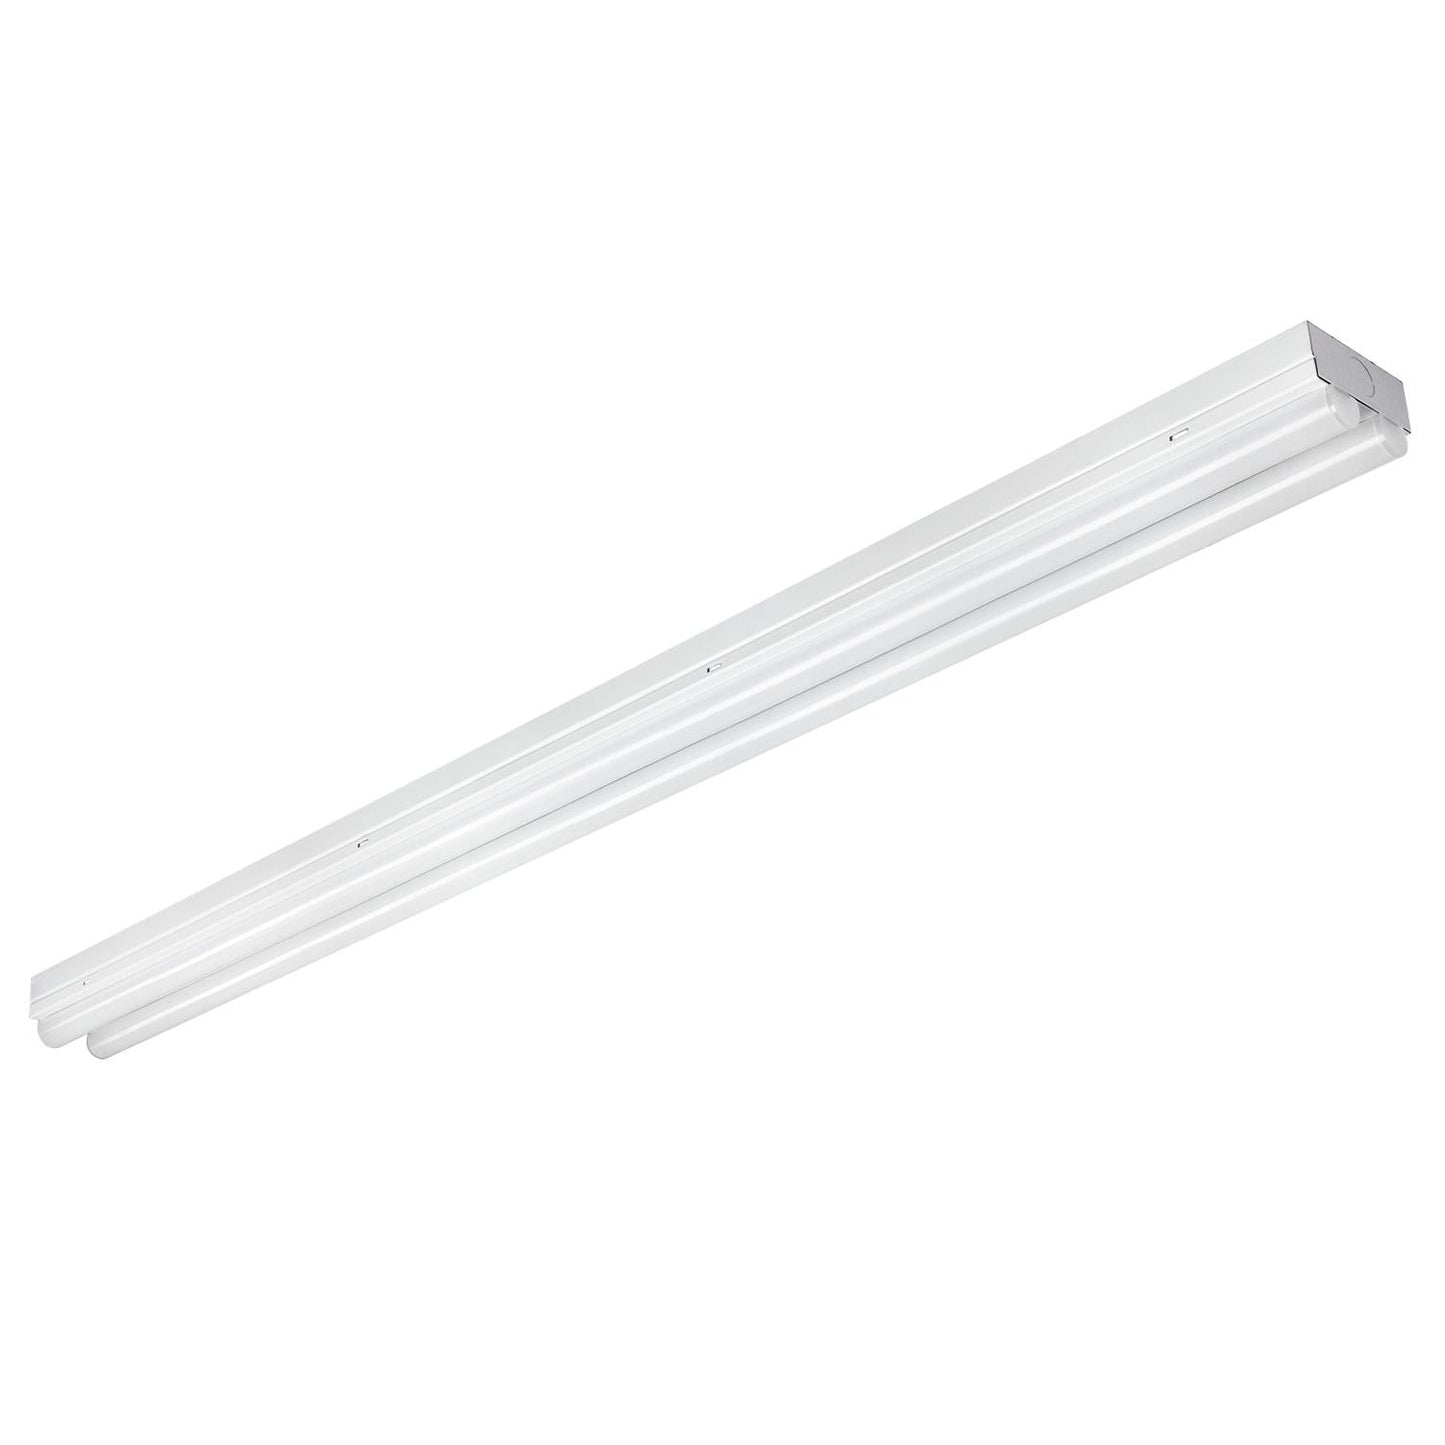 Sunlite LED 48" Linear Dual Strip Fixture, 30 Watts, 3000K Warm White, 3850 Lumen